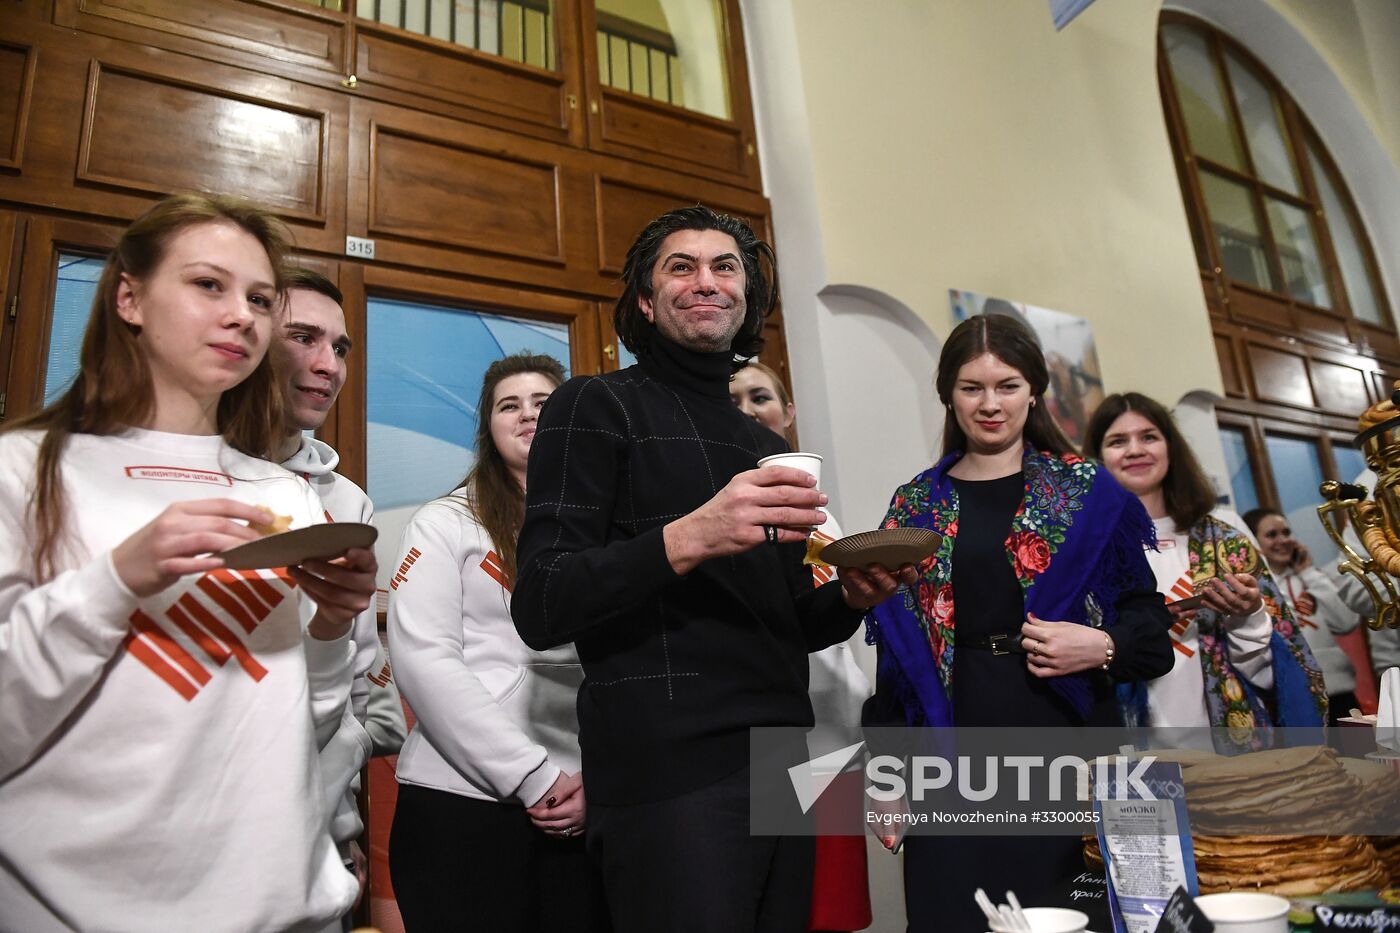 Celebrating Maslenitsa at Vladimir Putin's campaign headquarters